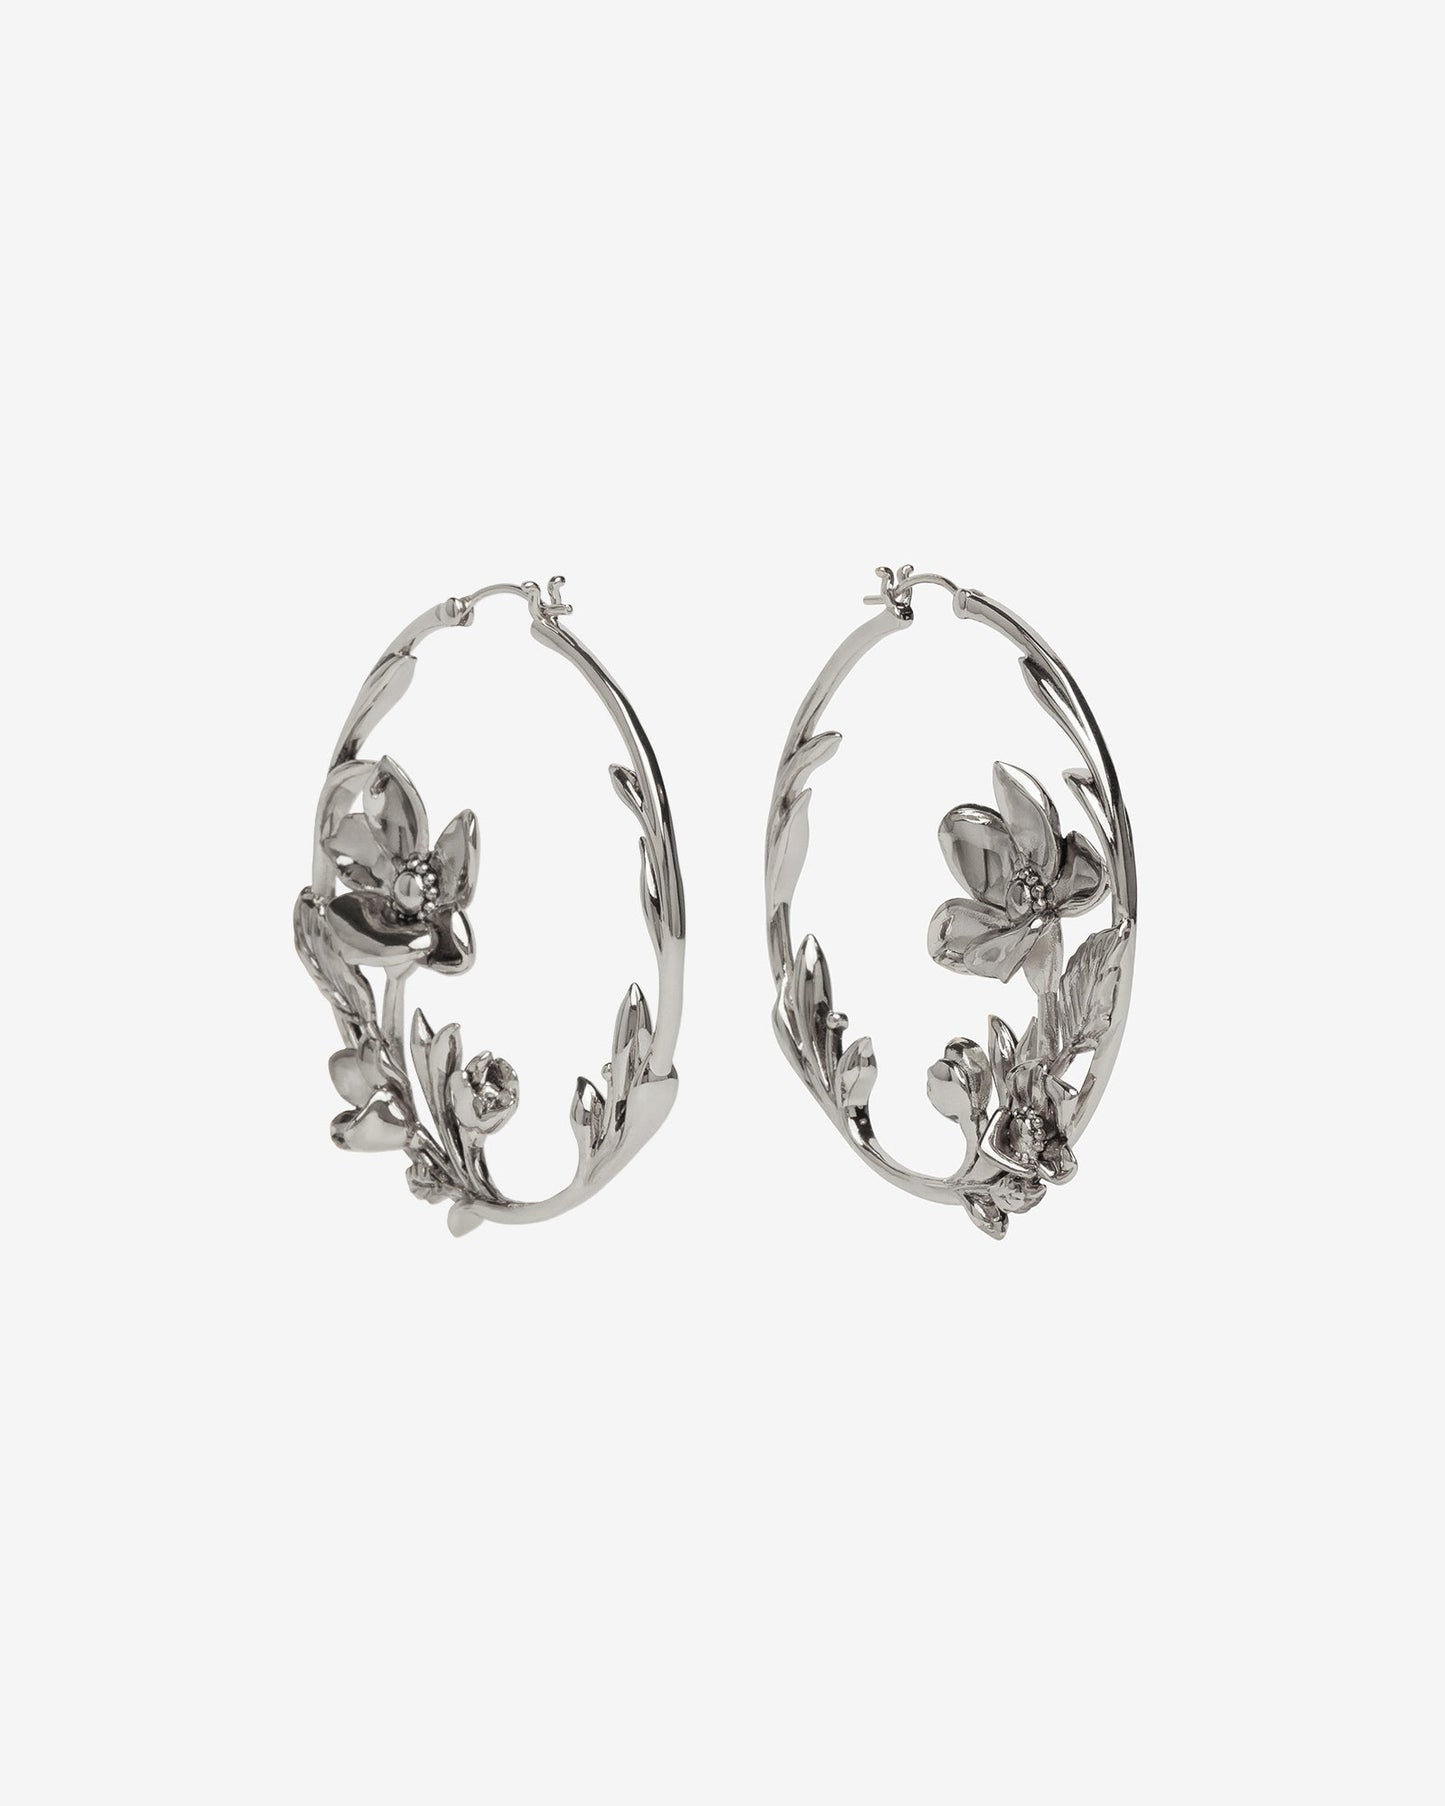 Botany Earrings by Jentonic x Ask & Embla - Earrings - Ask and Embla